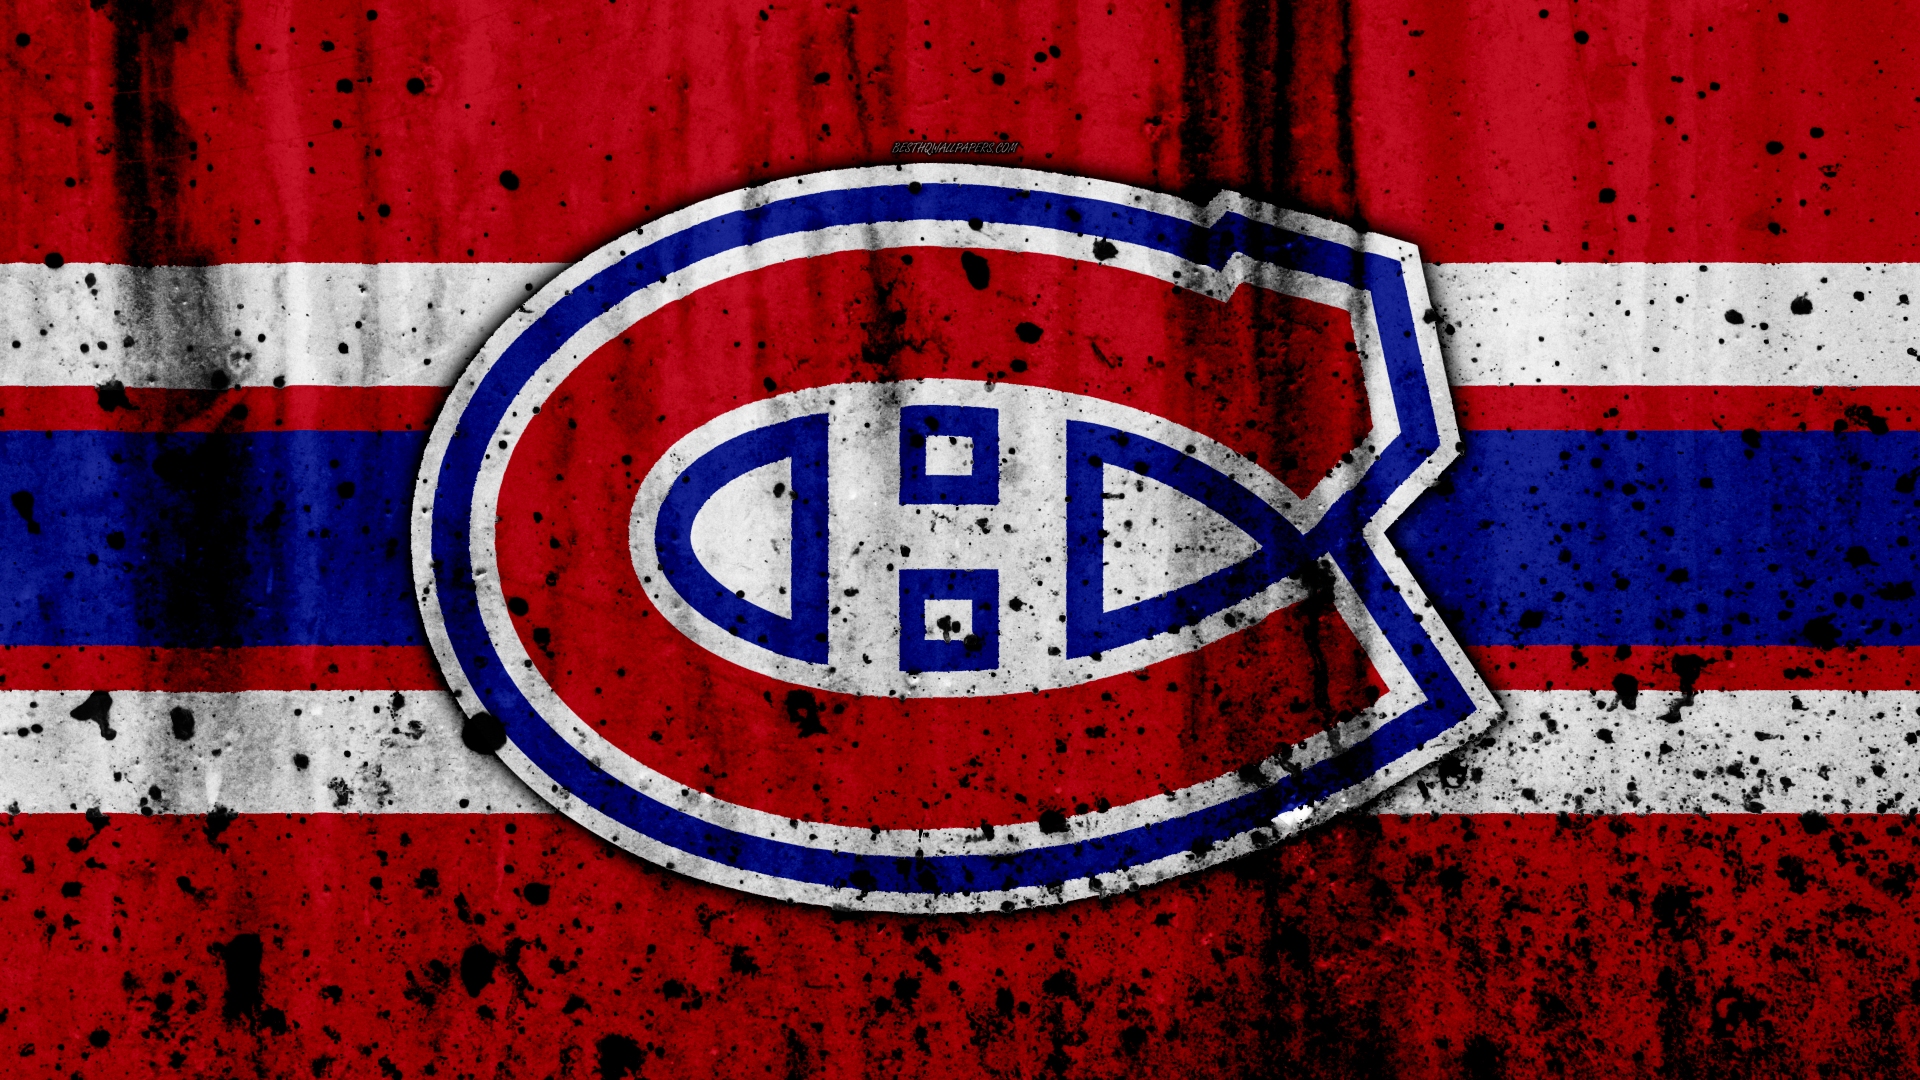 Montreal Canadiens Wallpaper 1920x1080 1